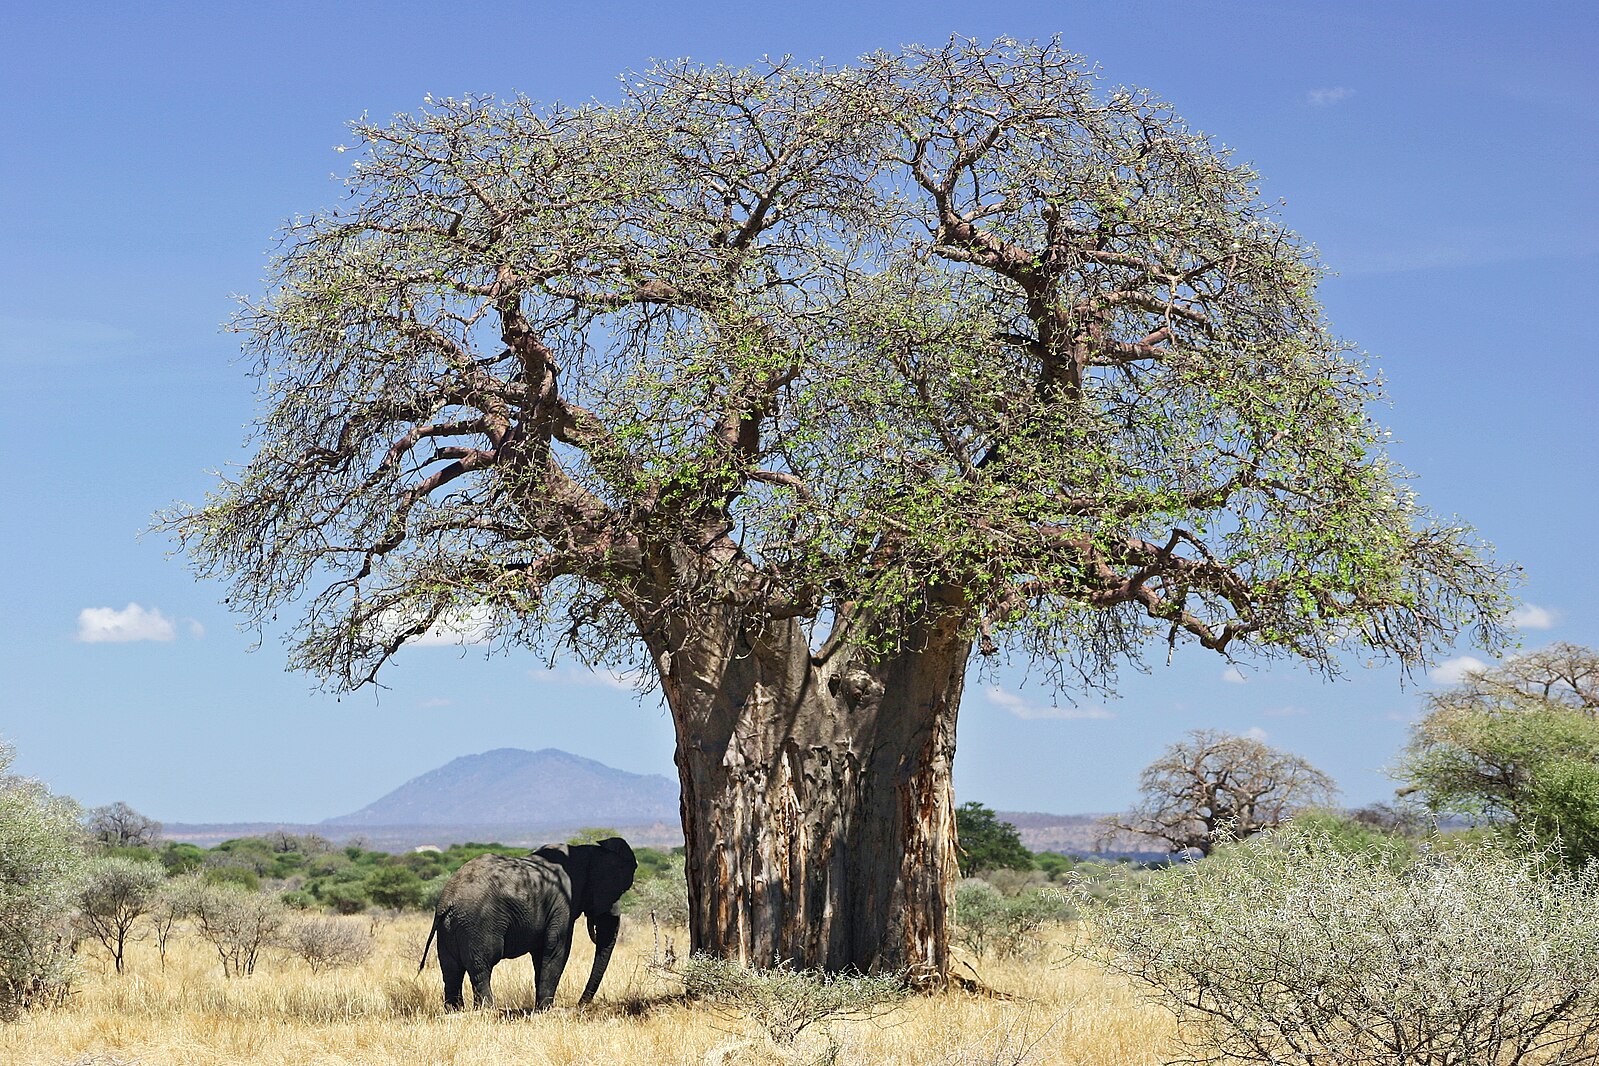 Baobab tree - Adansonia digitata